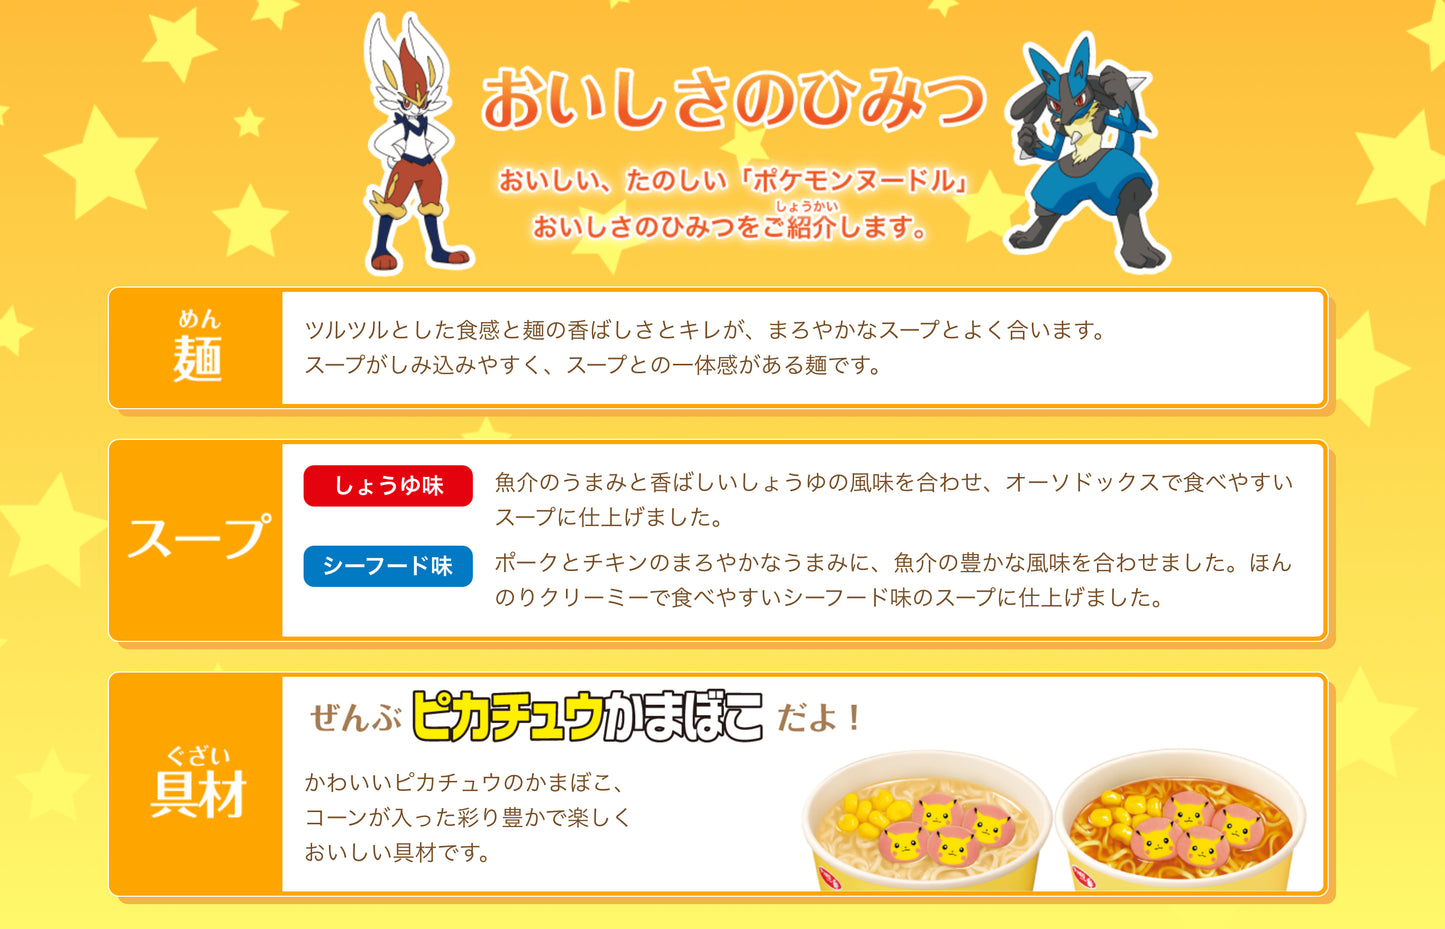 Pokemon Noodles Ramen Pikachu Stickers Instant Soy Sauce Seafood 2 Flavors Japan